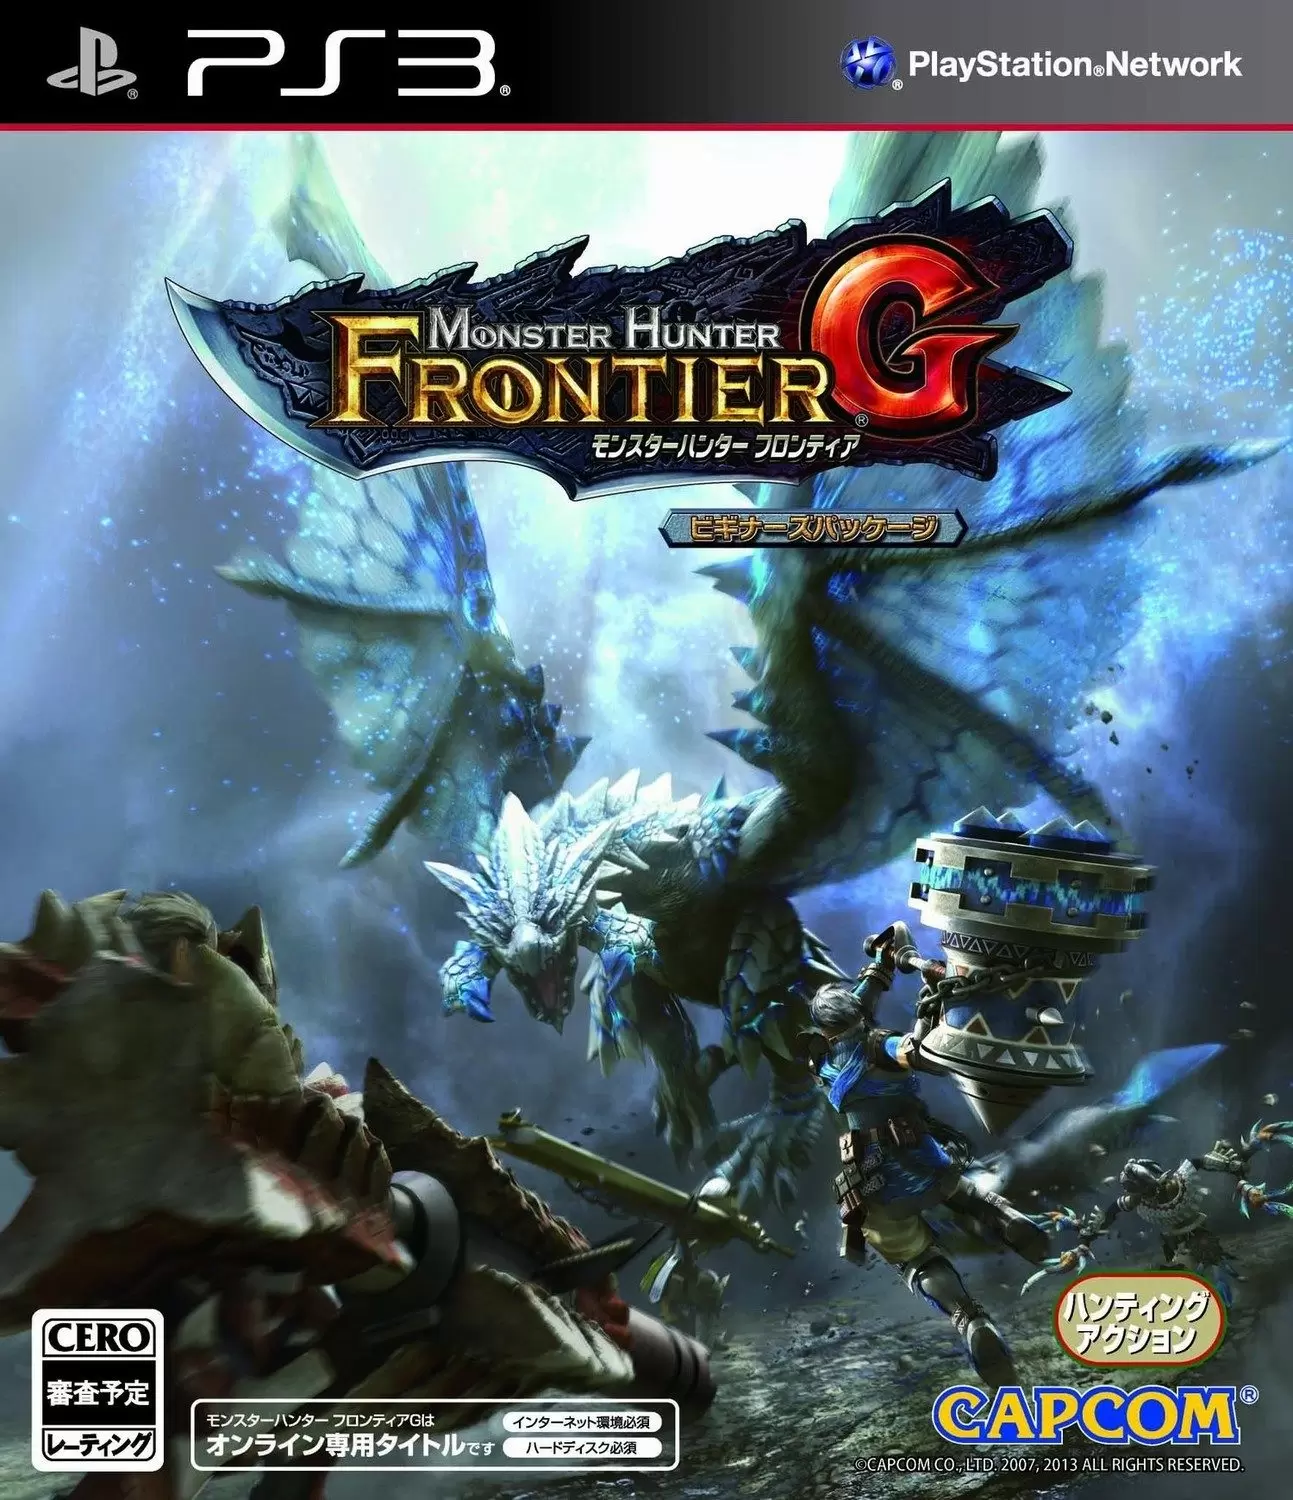 PS3 Games - Monster Hunter Frontier G